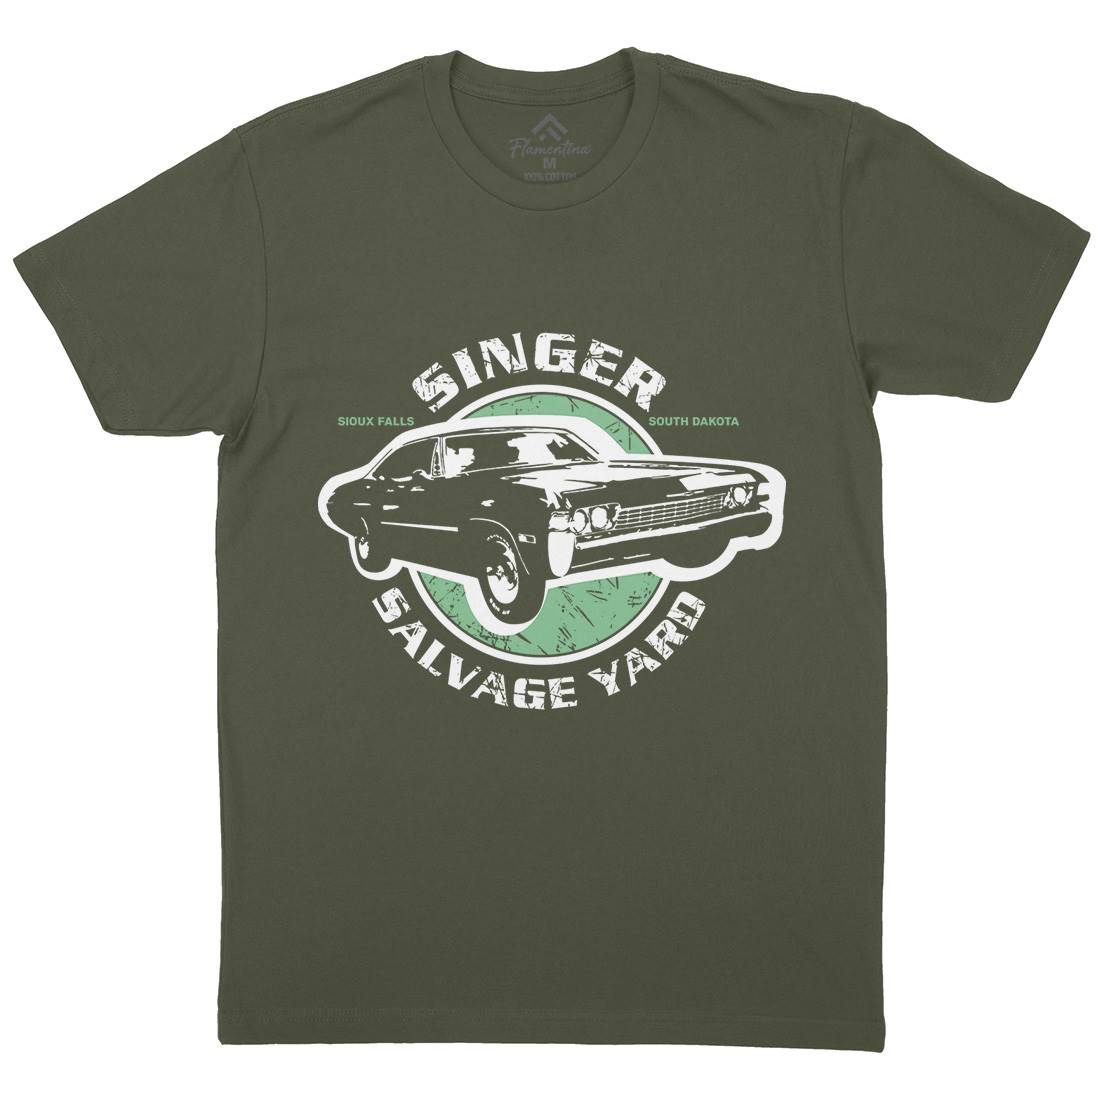 Singer Salvage Yard Mens Crew Neck T-Shirt Cars D377